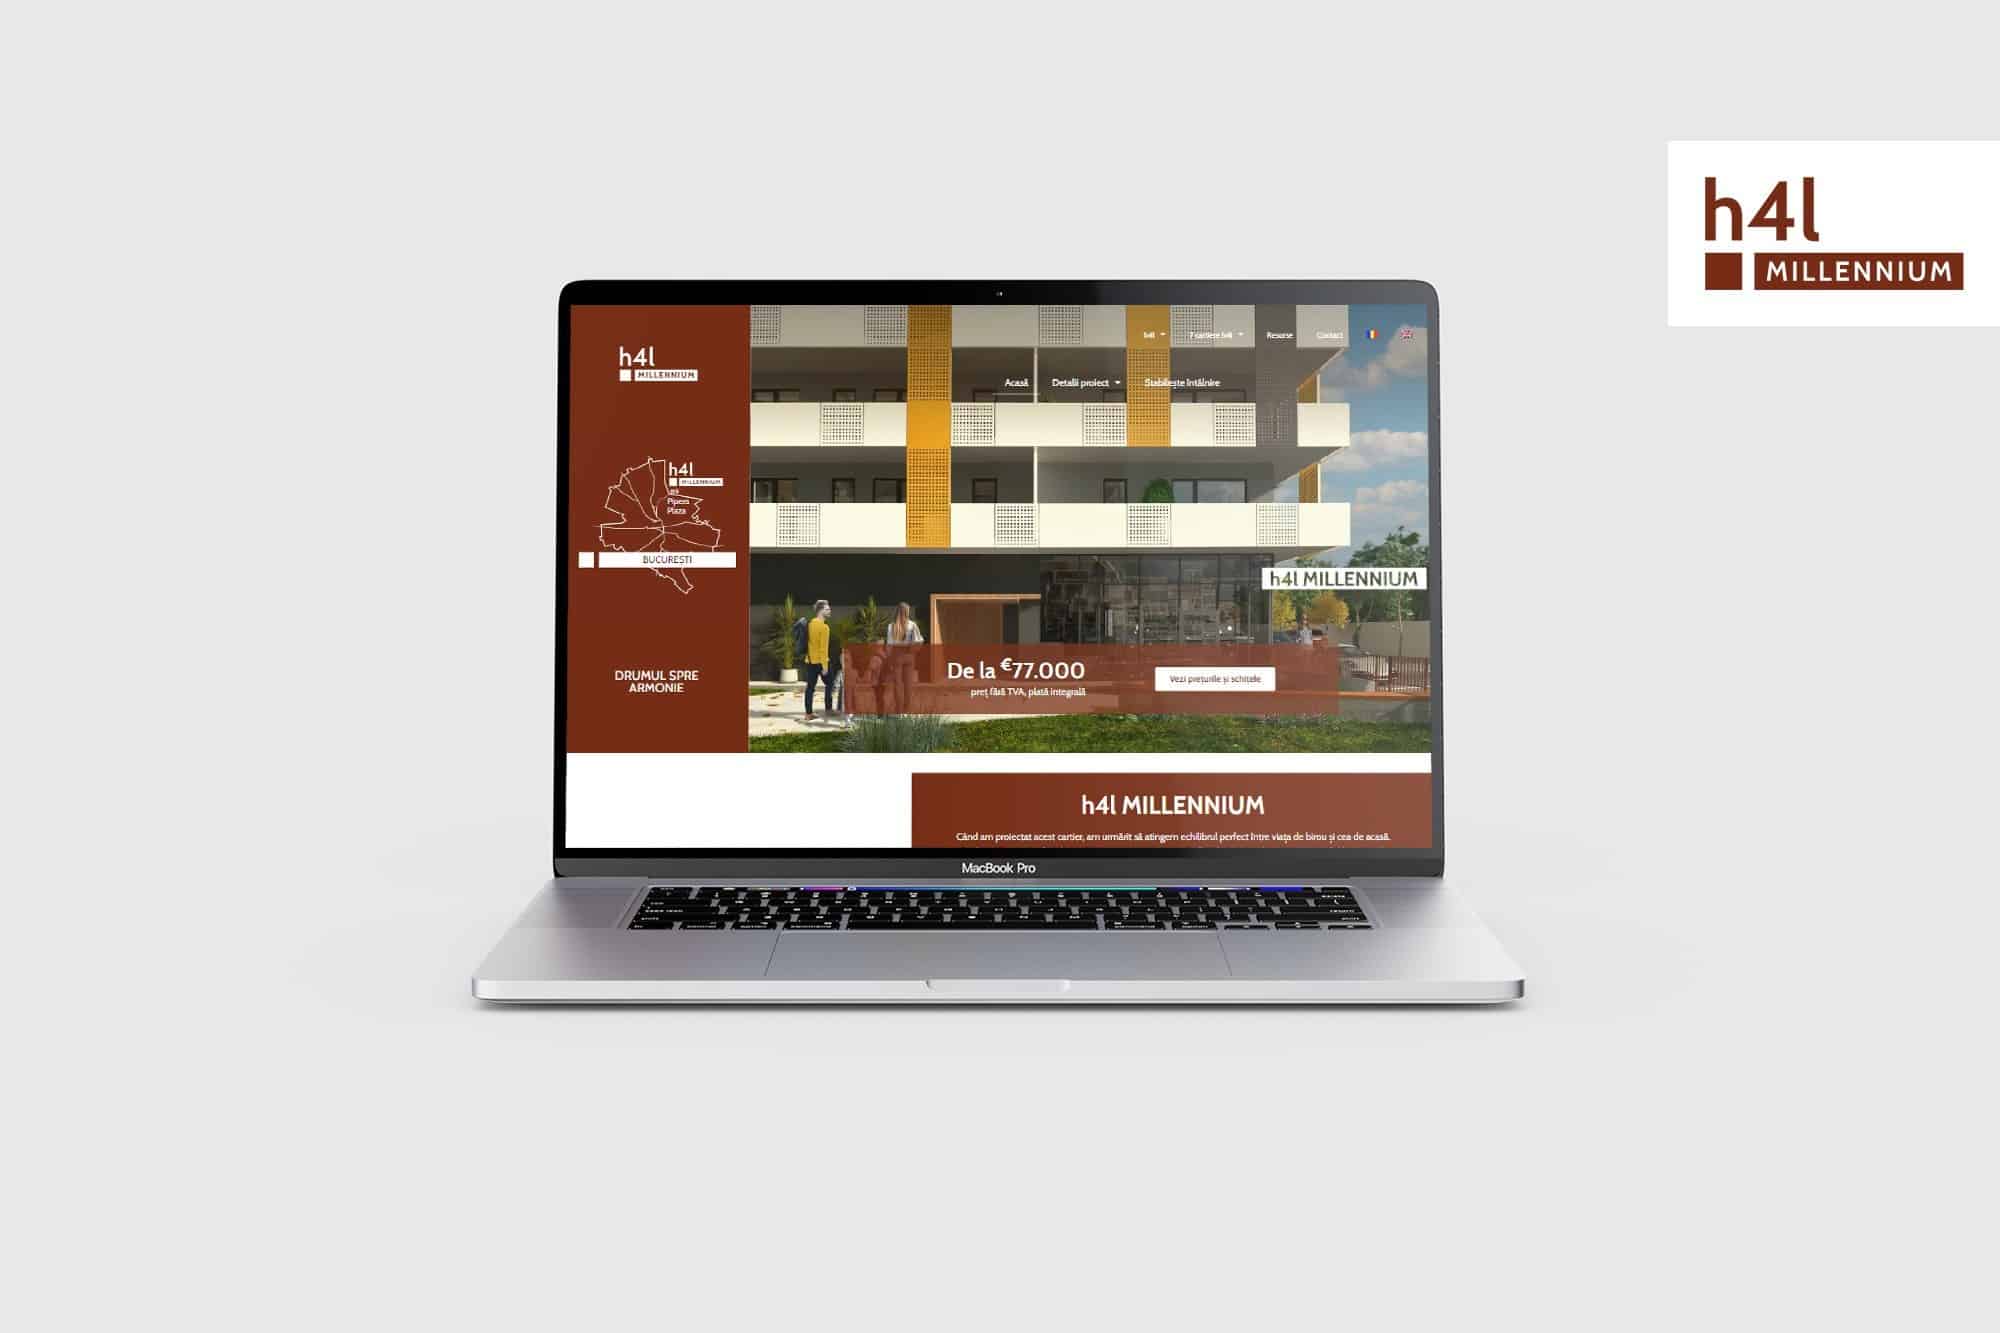 Toud web design project - h4l MILLENNIUM, website design, web design, UX design, UI design, website creation, residential neighborhood